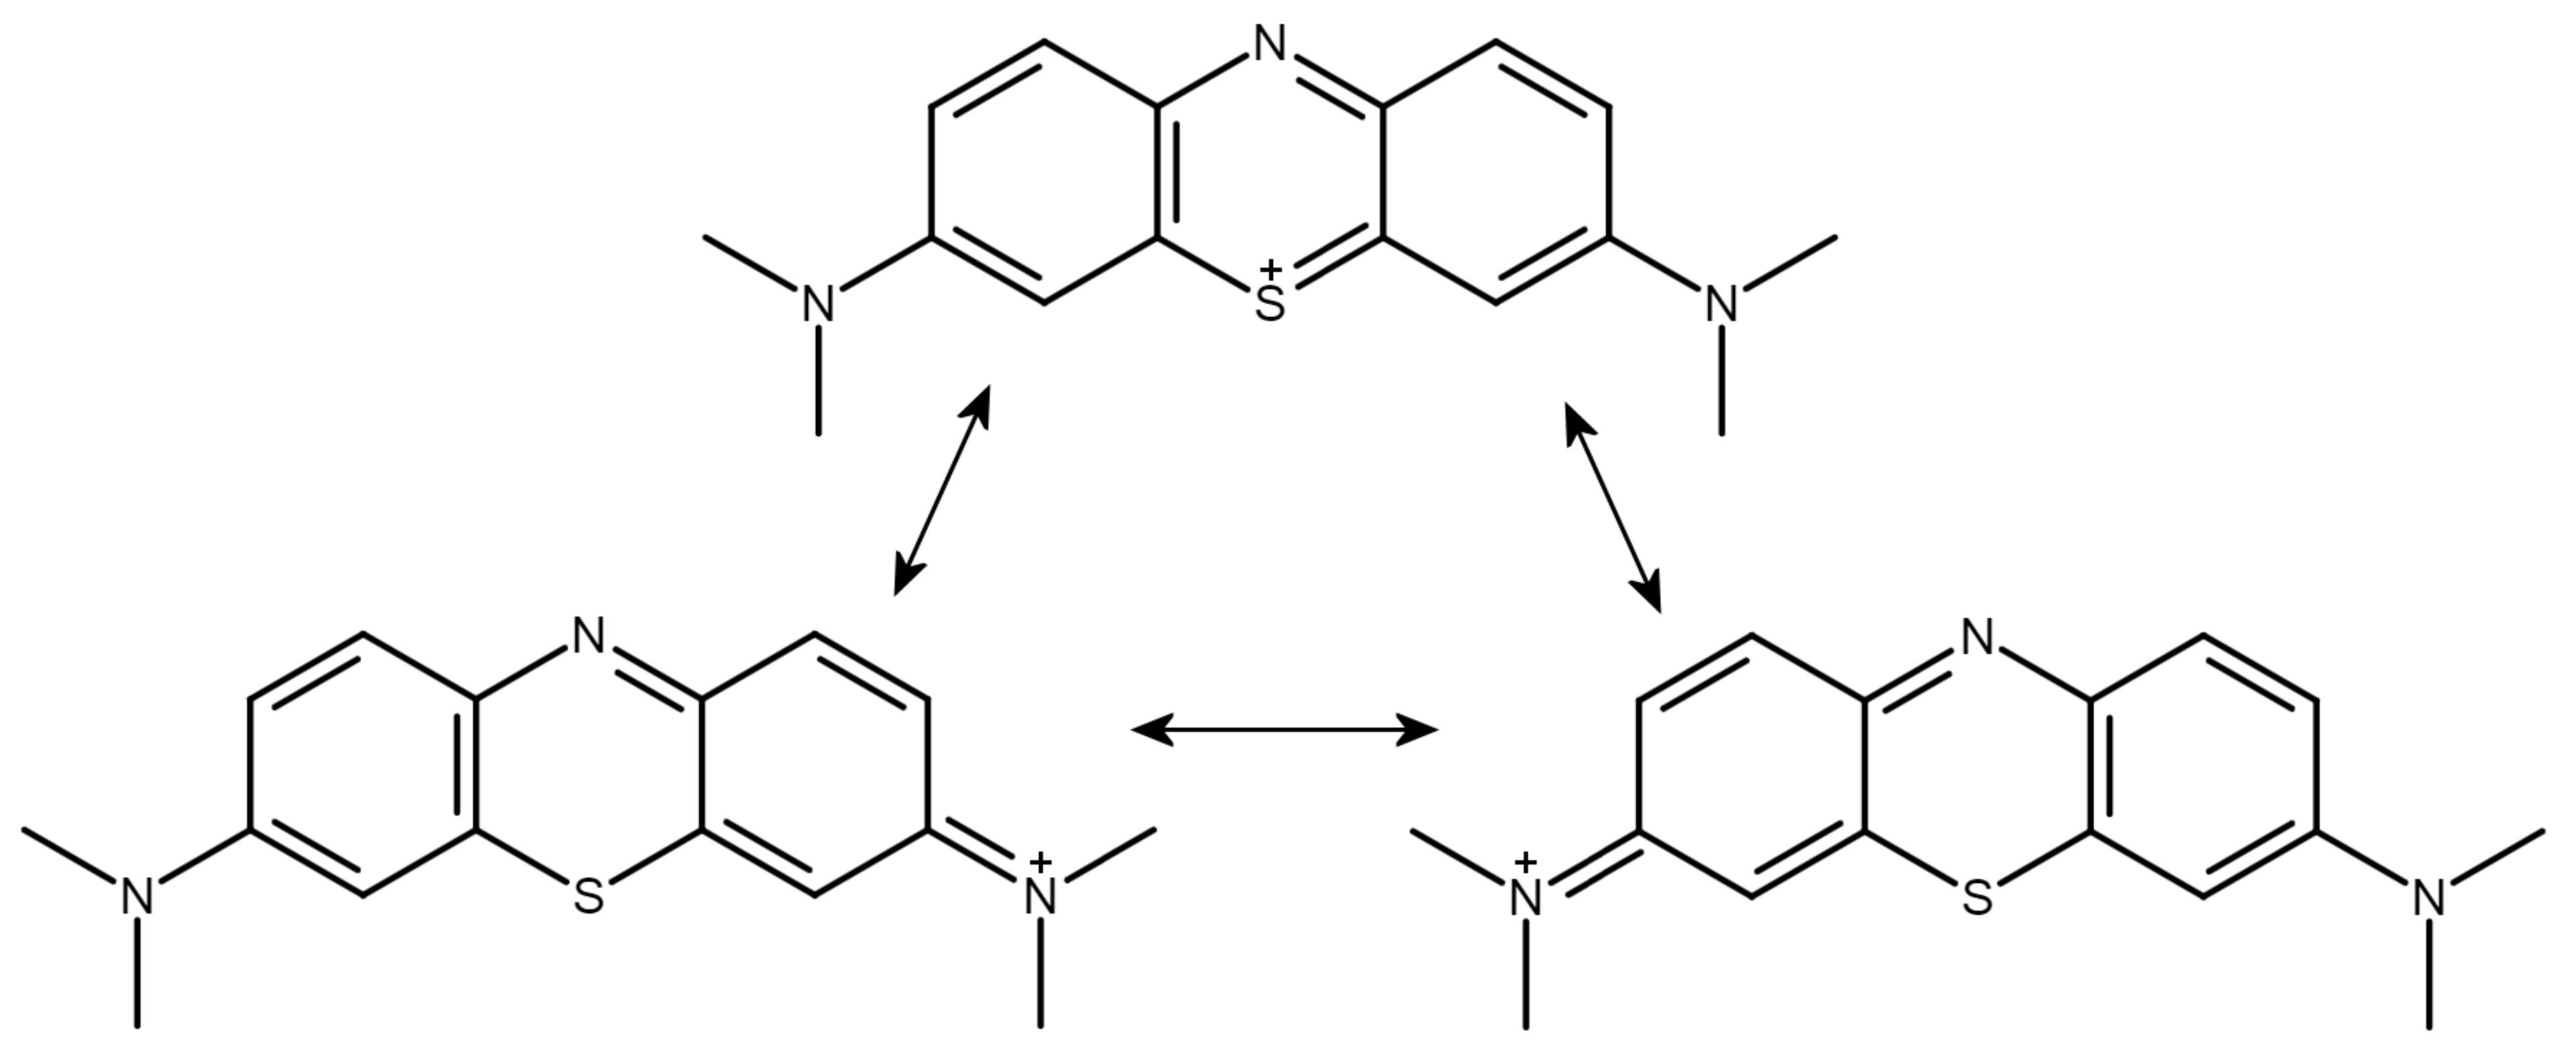 terminal methylene